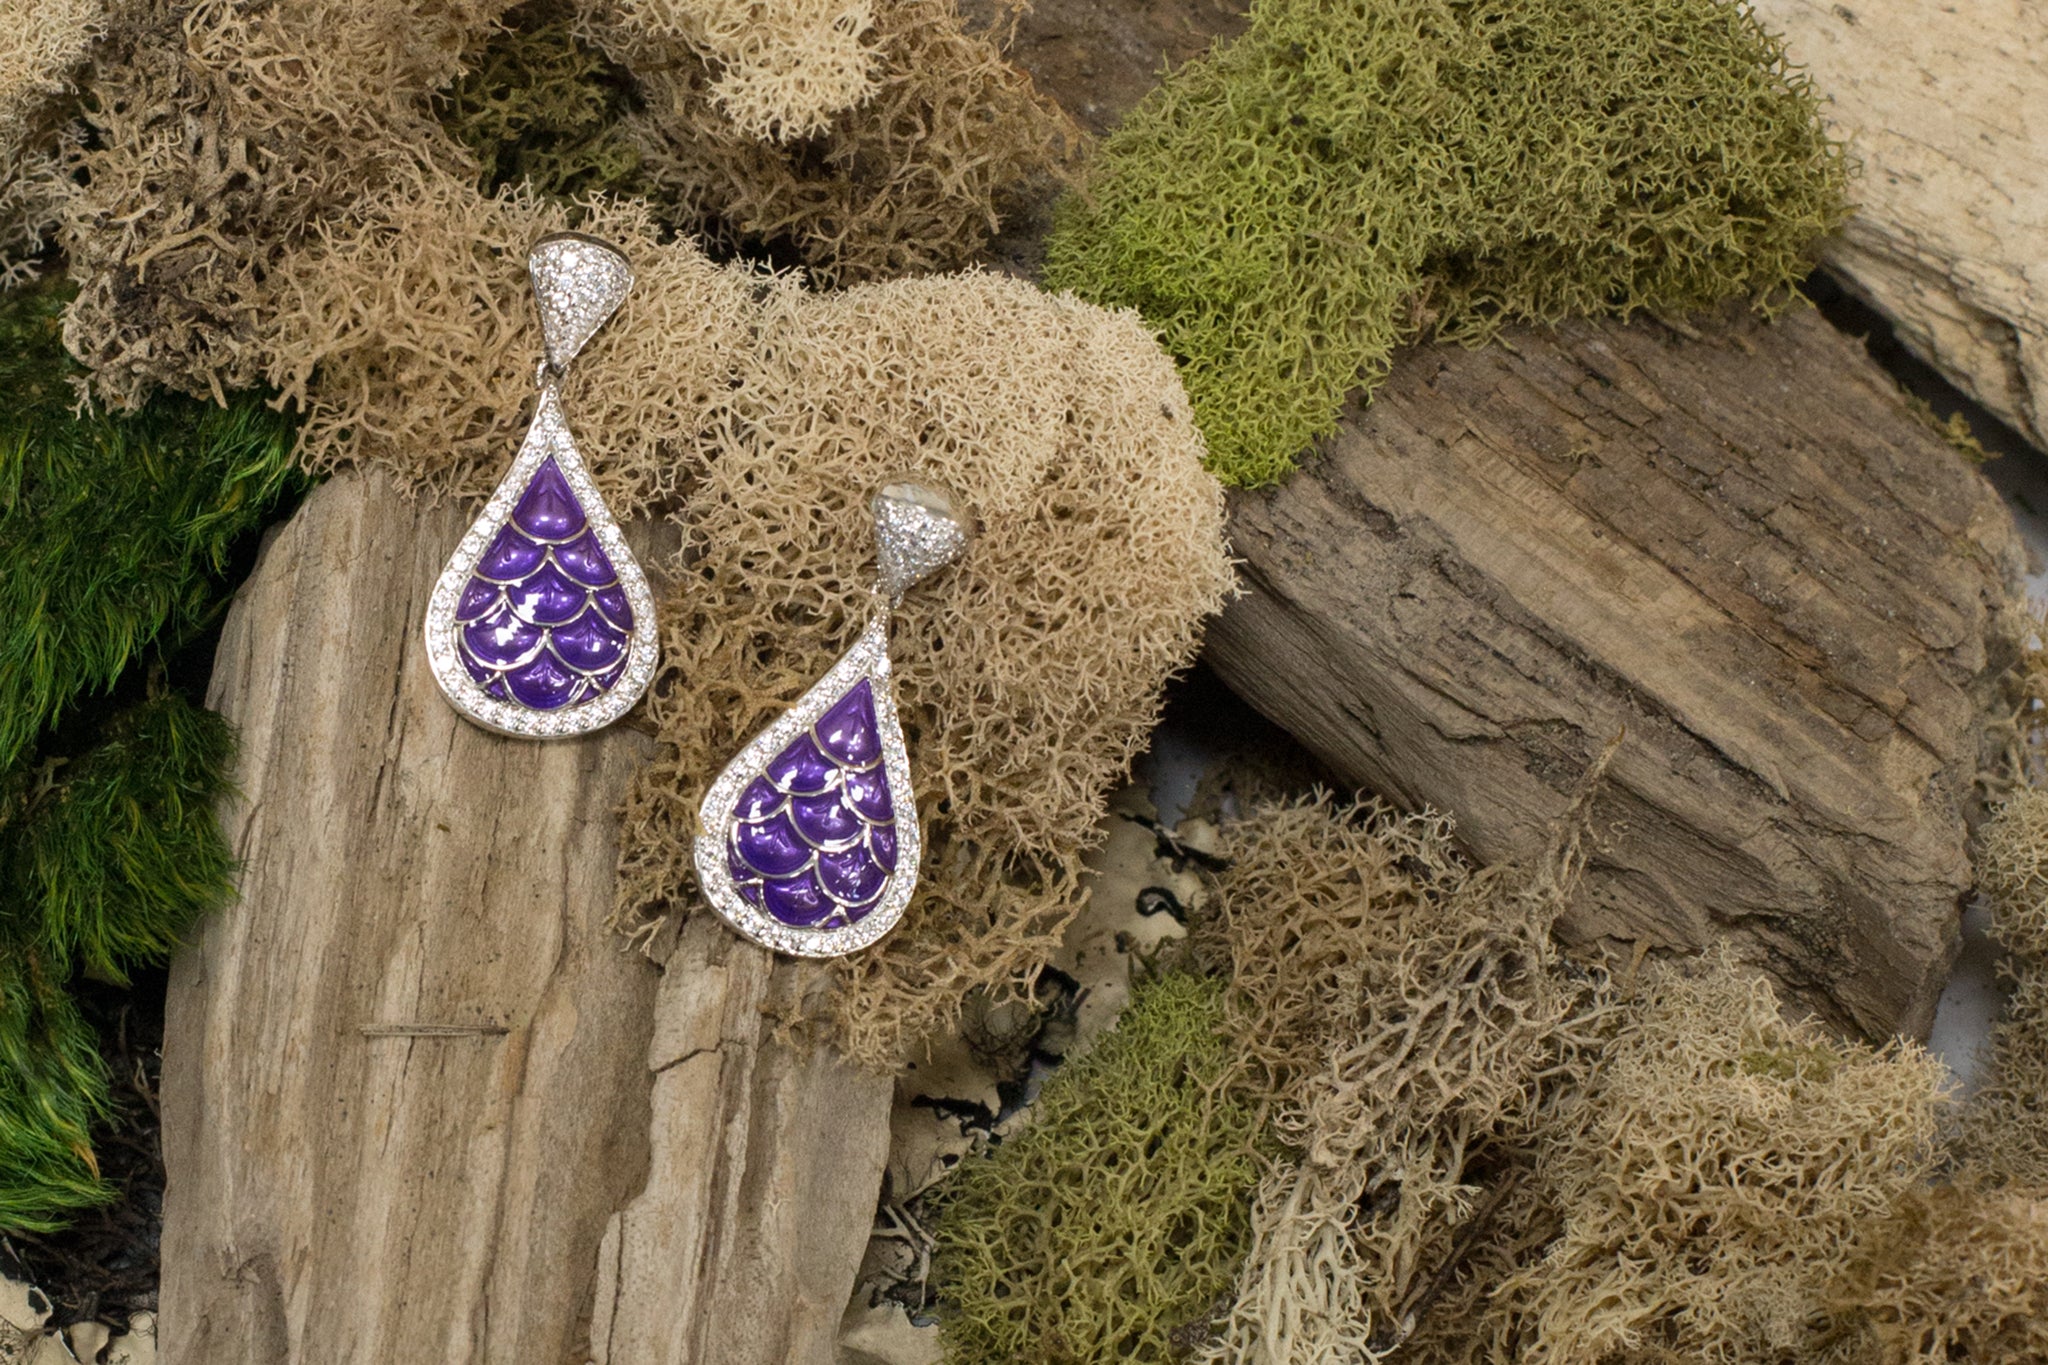 Marina Purple Earrings